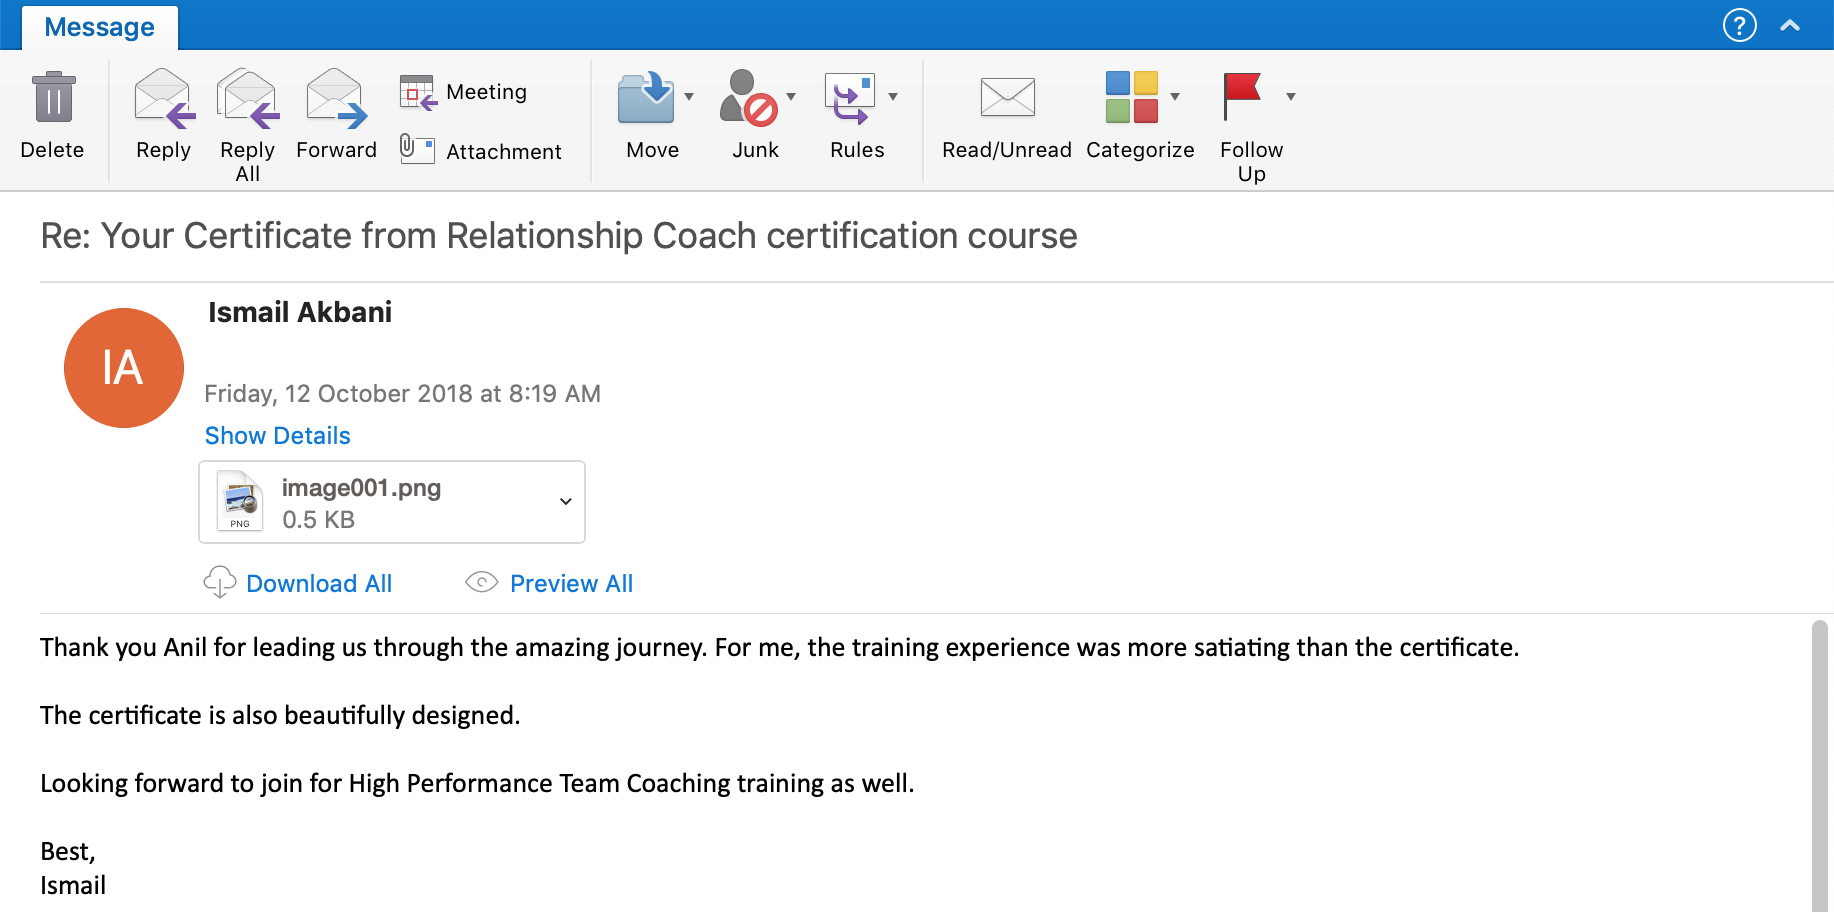 icf nlp pune mumbai anil dagia relationship coach training testimonial ismail akbani 1